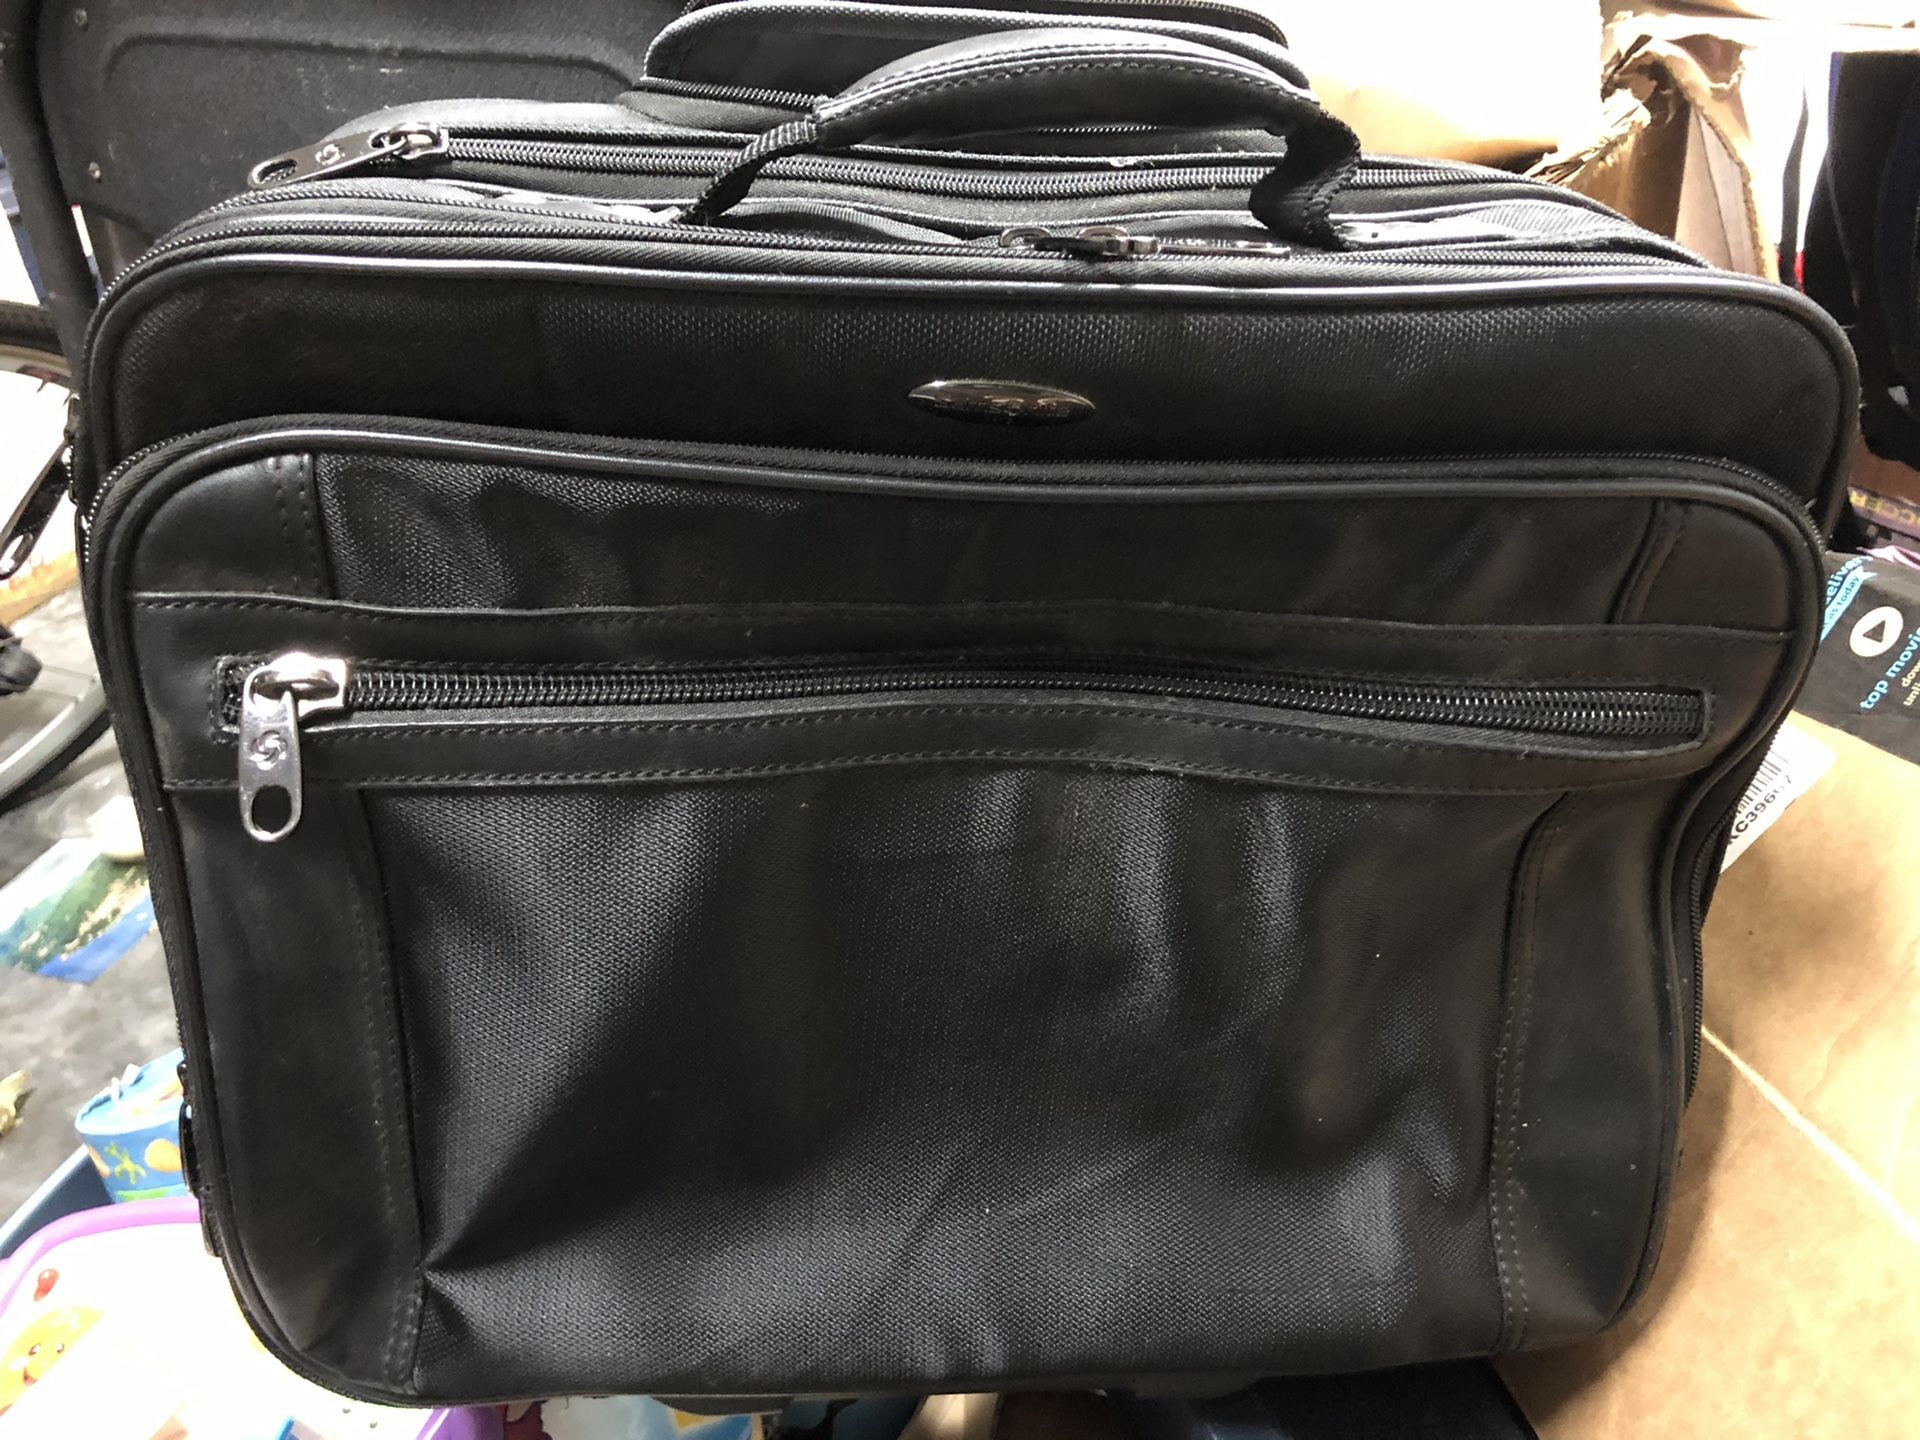 Samsonite rolling under seat luggage/briefcase style bag